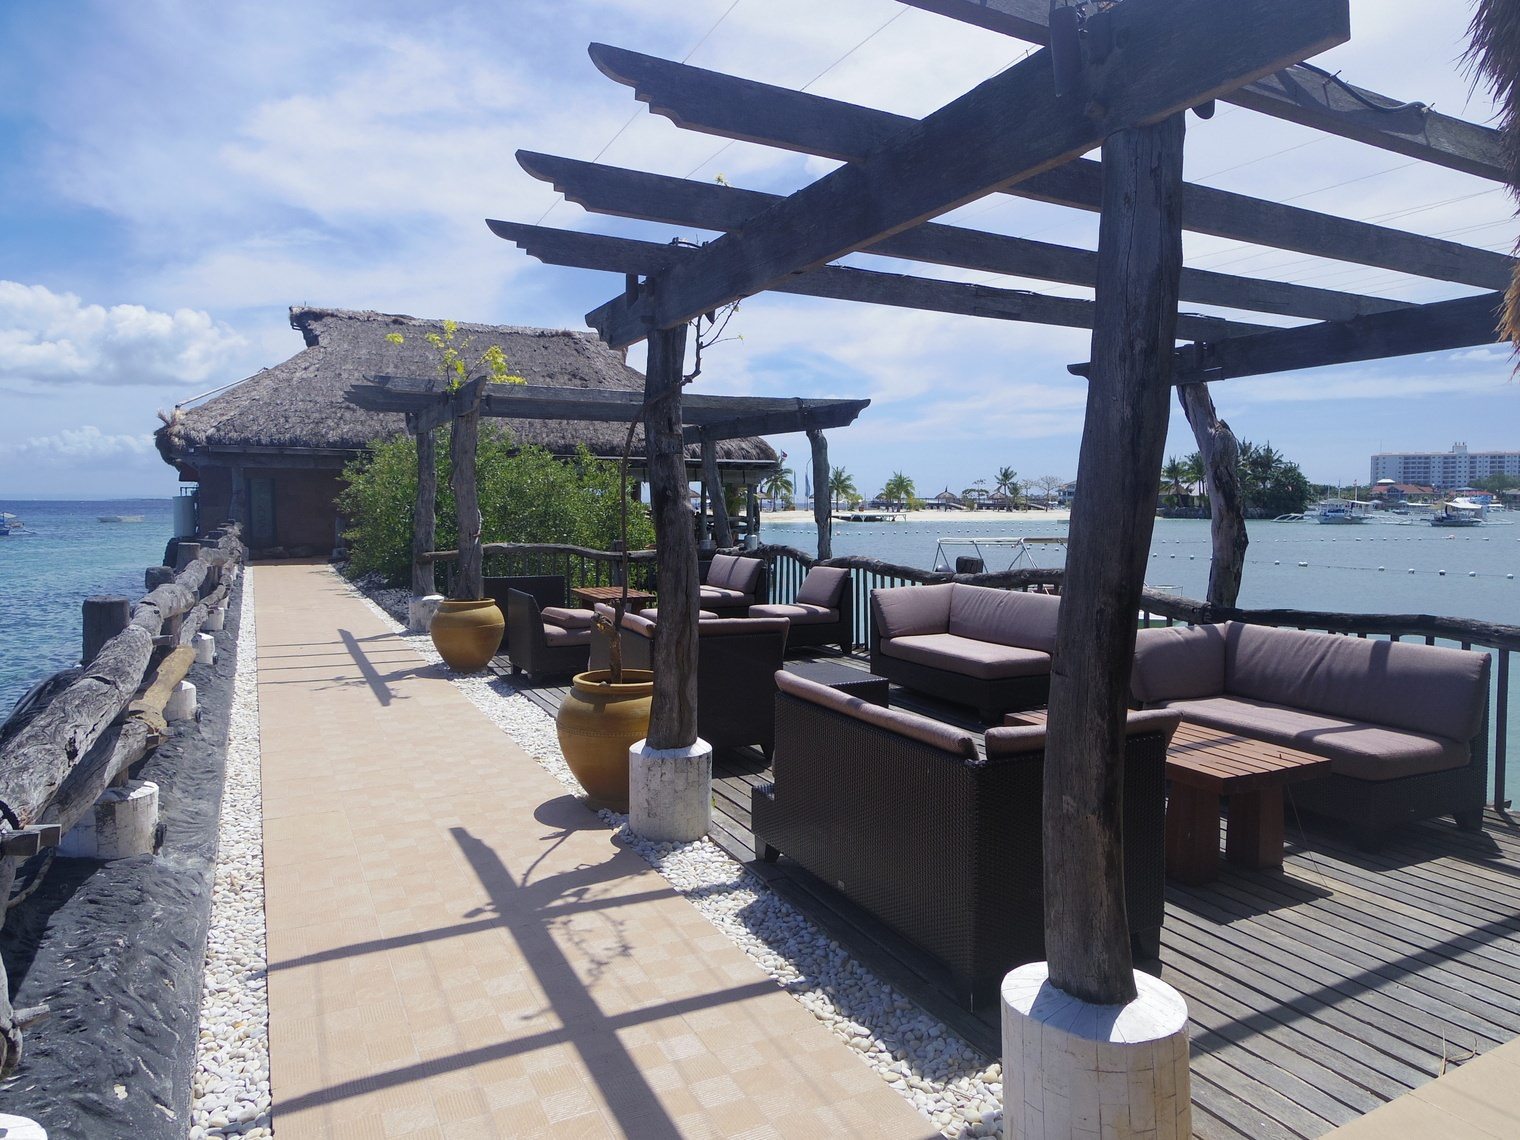 Why Bluewater Maribago Beach Resort, Mactan Island, Cebu is Ideal for all Travellers